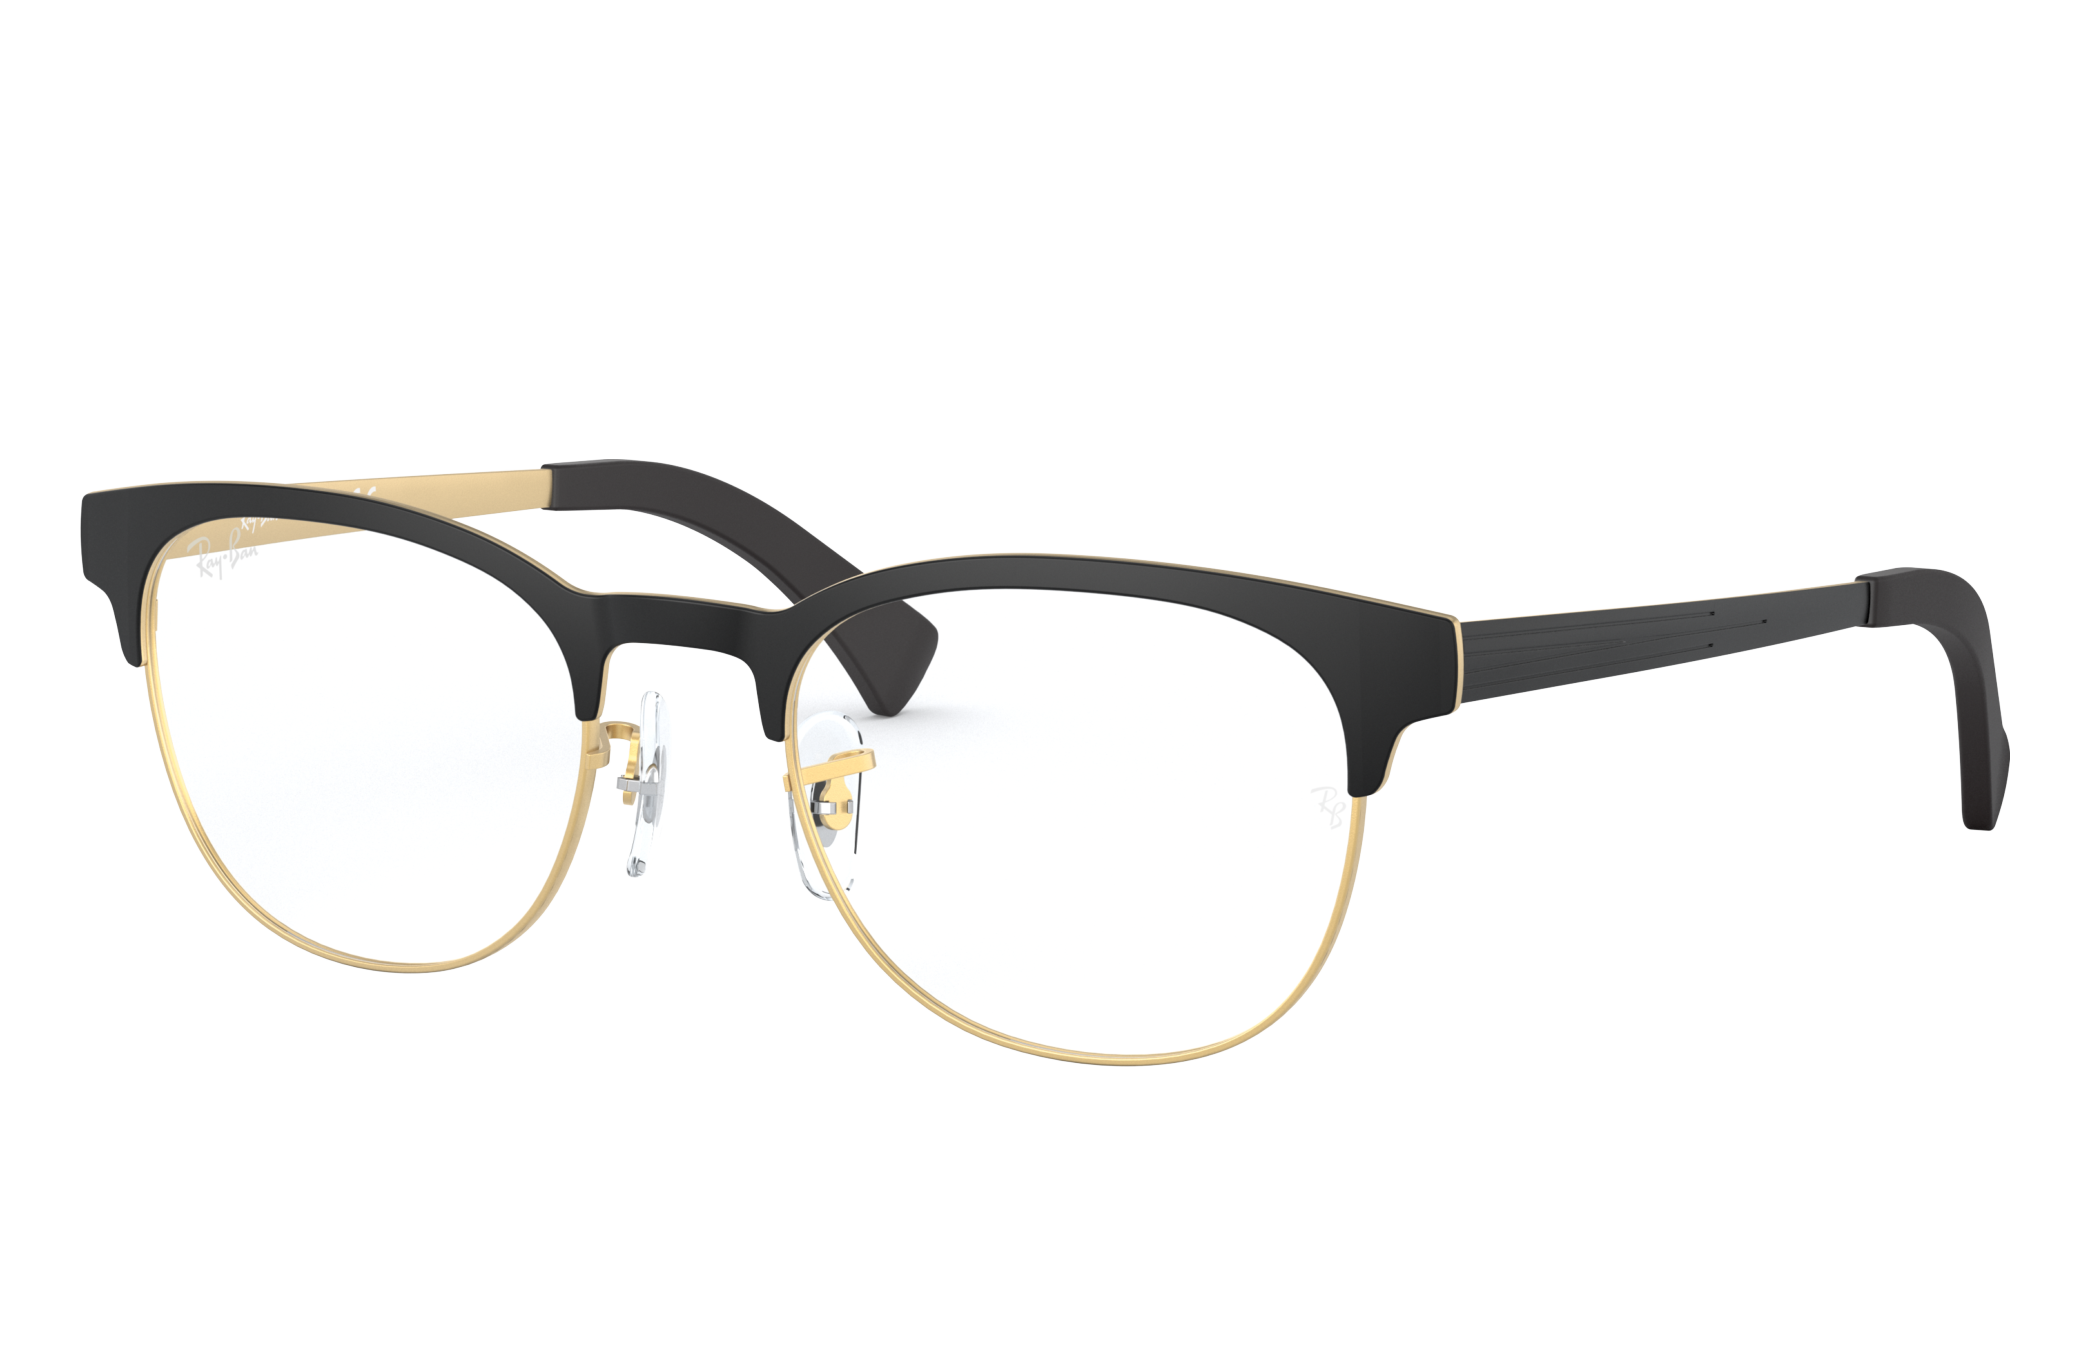 Rb6317 Optics Eyeglasses with Black On Gold Frame | Ray-Ban®